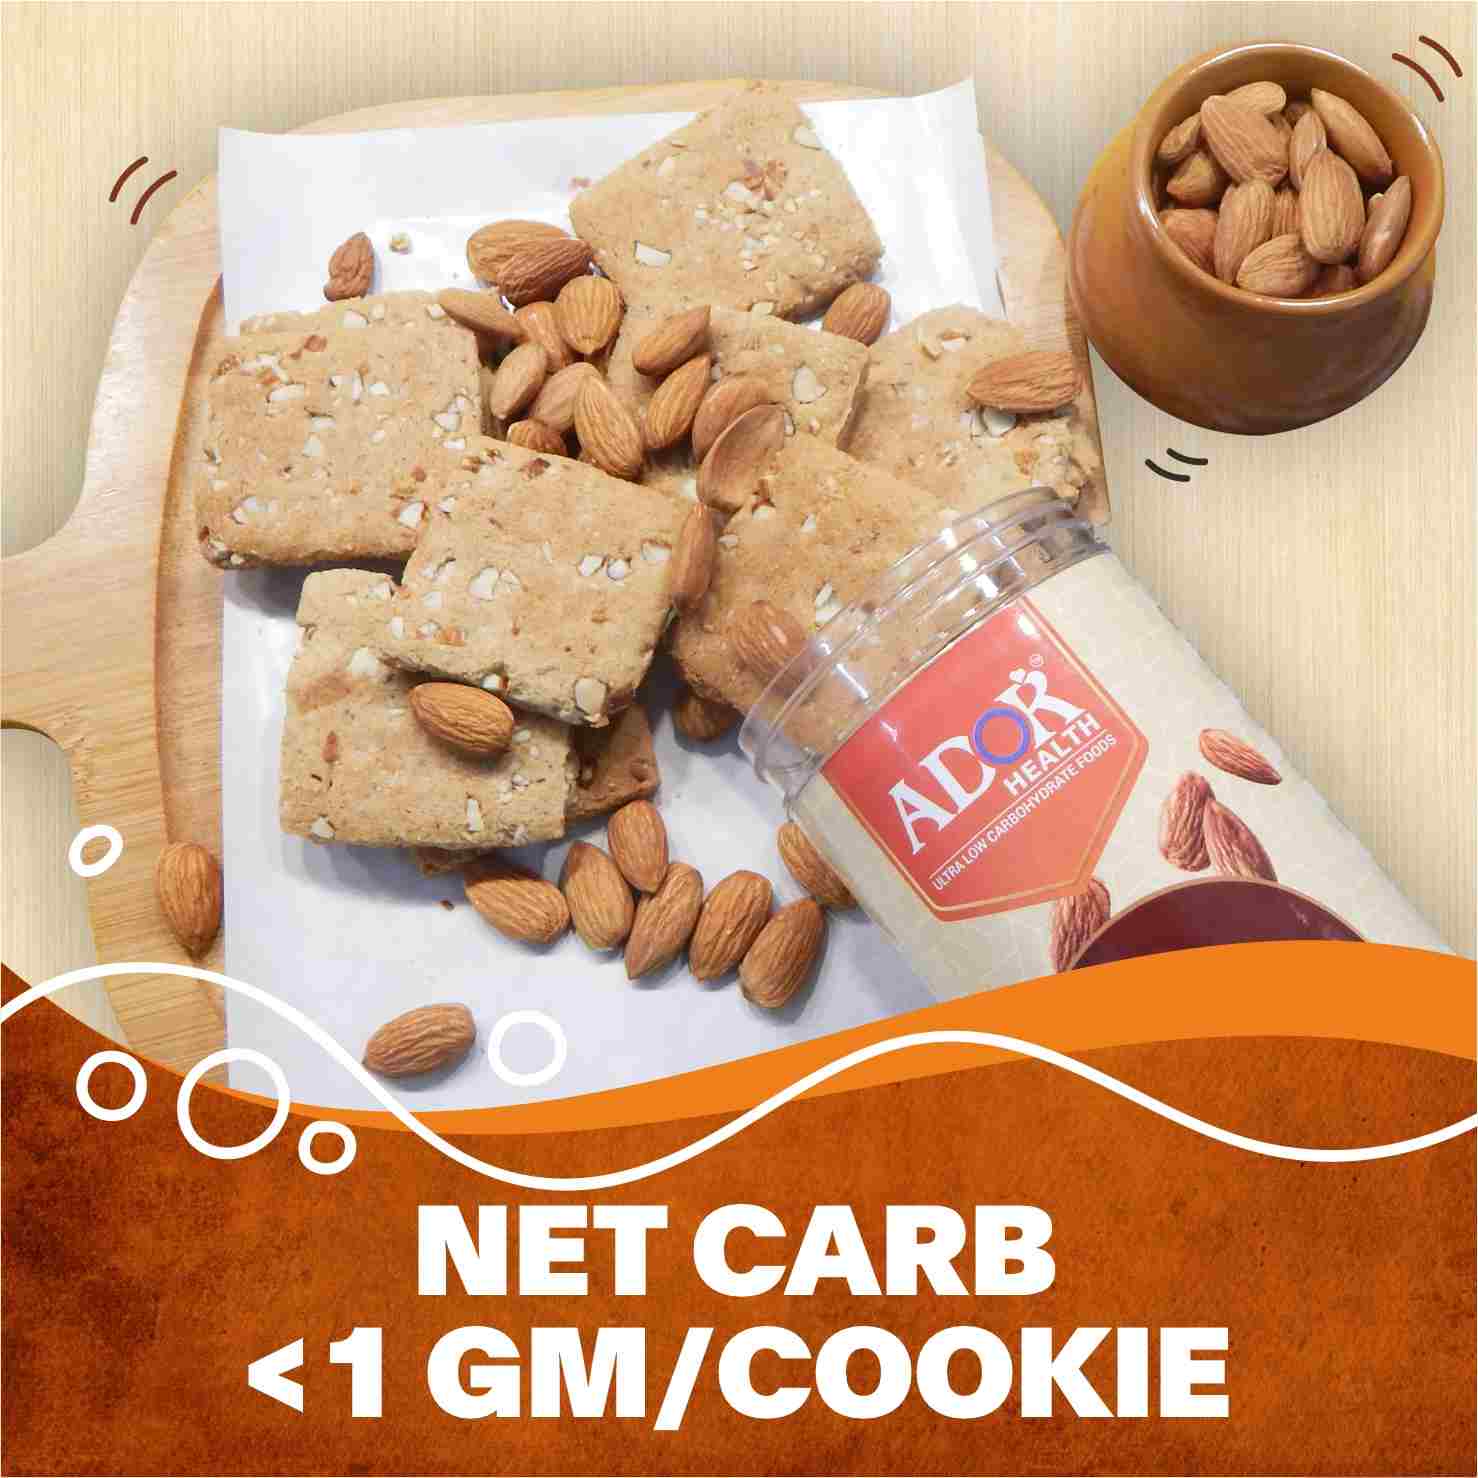 Keto Almond Cookies | No soya | No Gluten | (200 Gram)